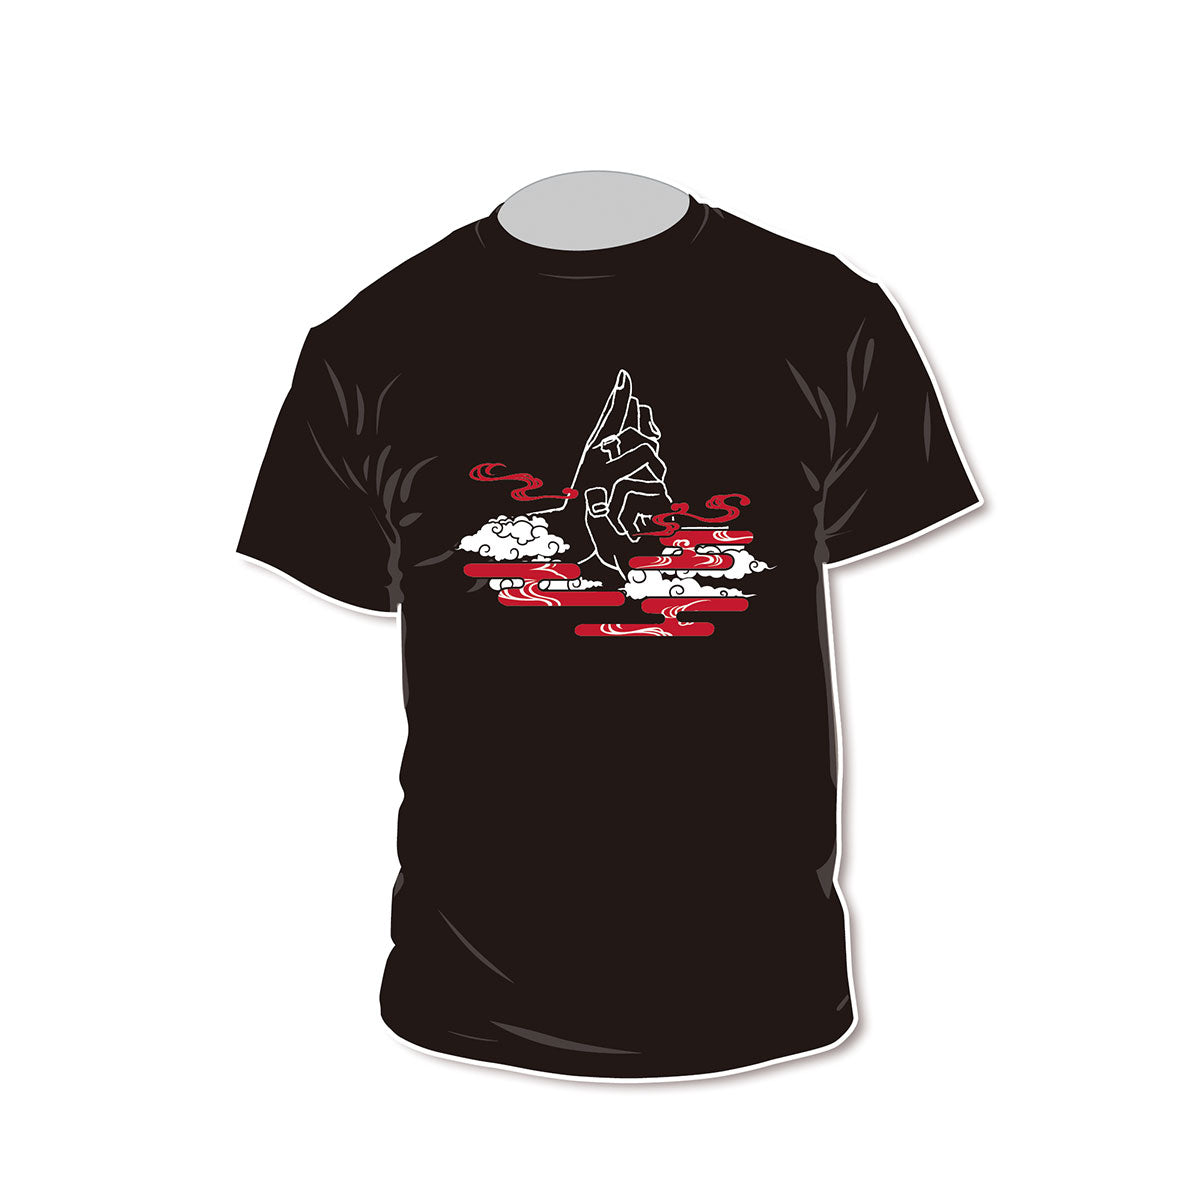 火影忍者疾風傳 T-Shirt 大家一起來結印 服裝 Microworks Online Store